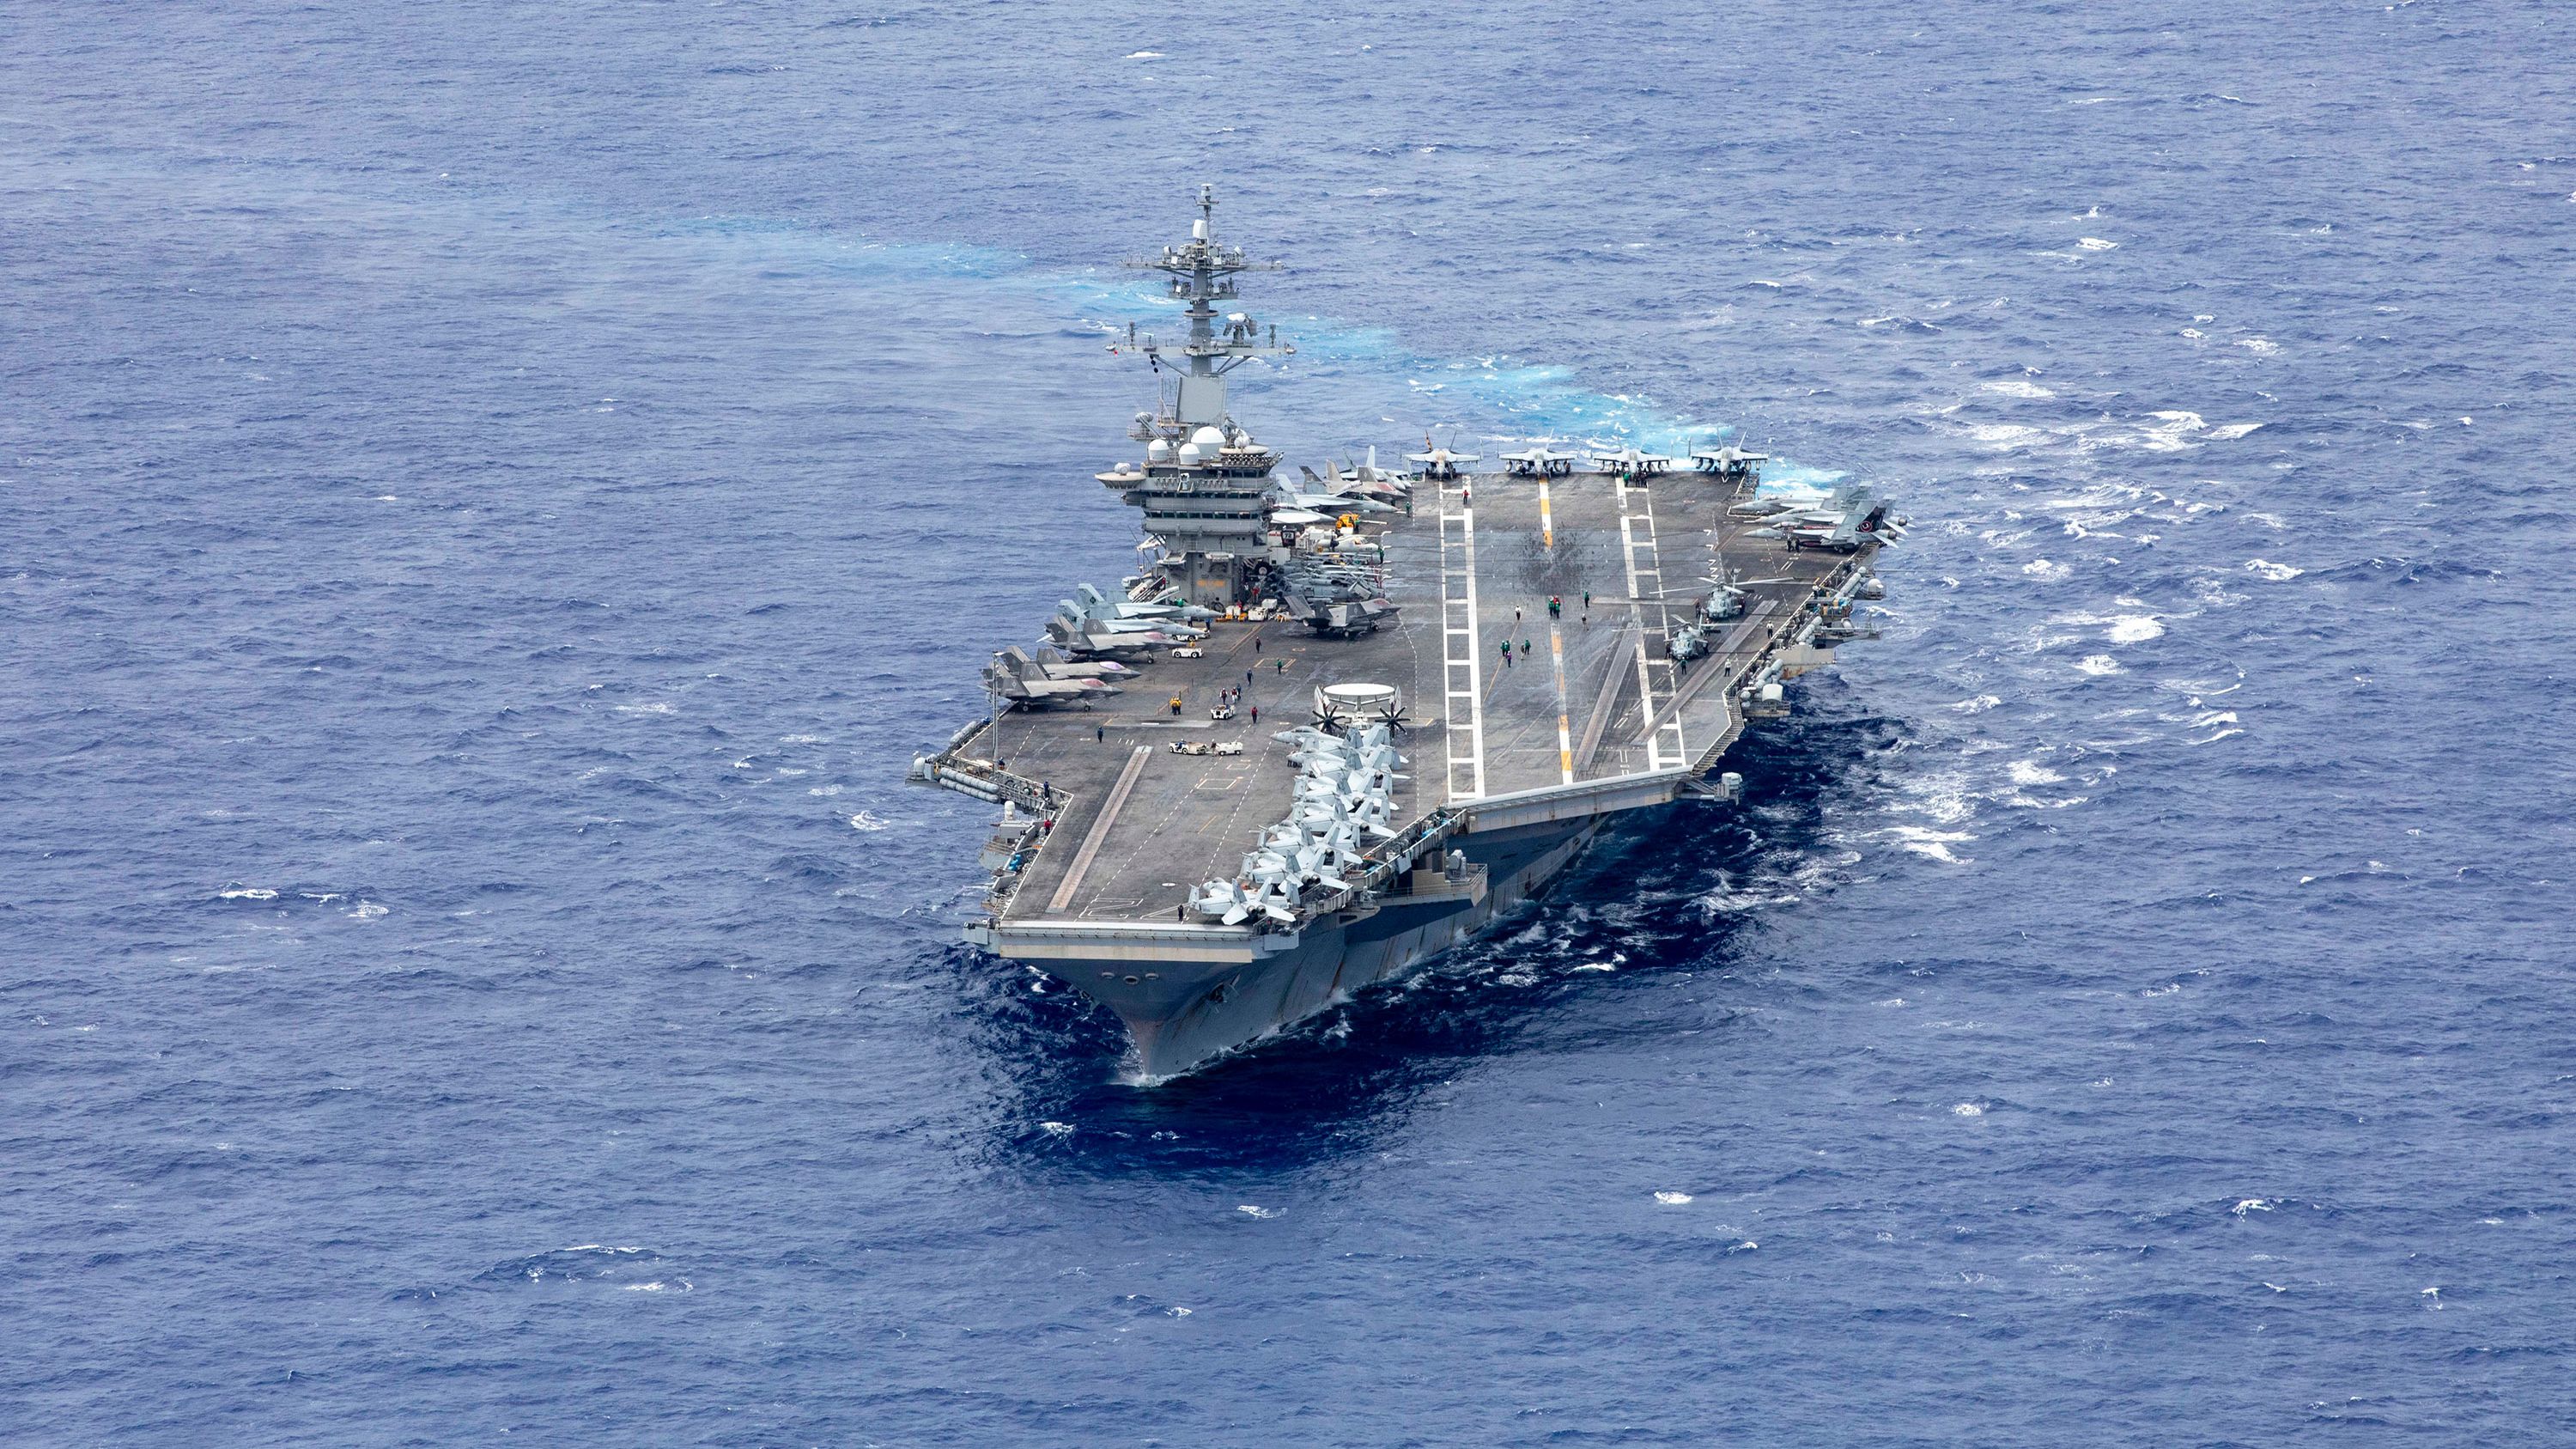 Nimitz-class aircraft carrier USS Abraham Lincoln (CVN 72) sails the Pacific Ocean.